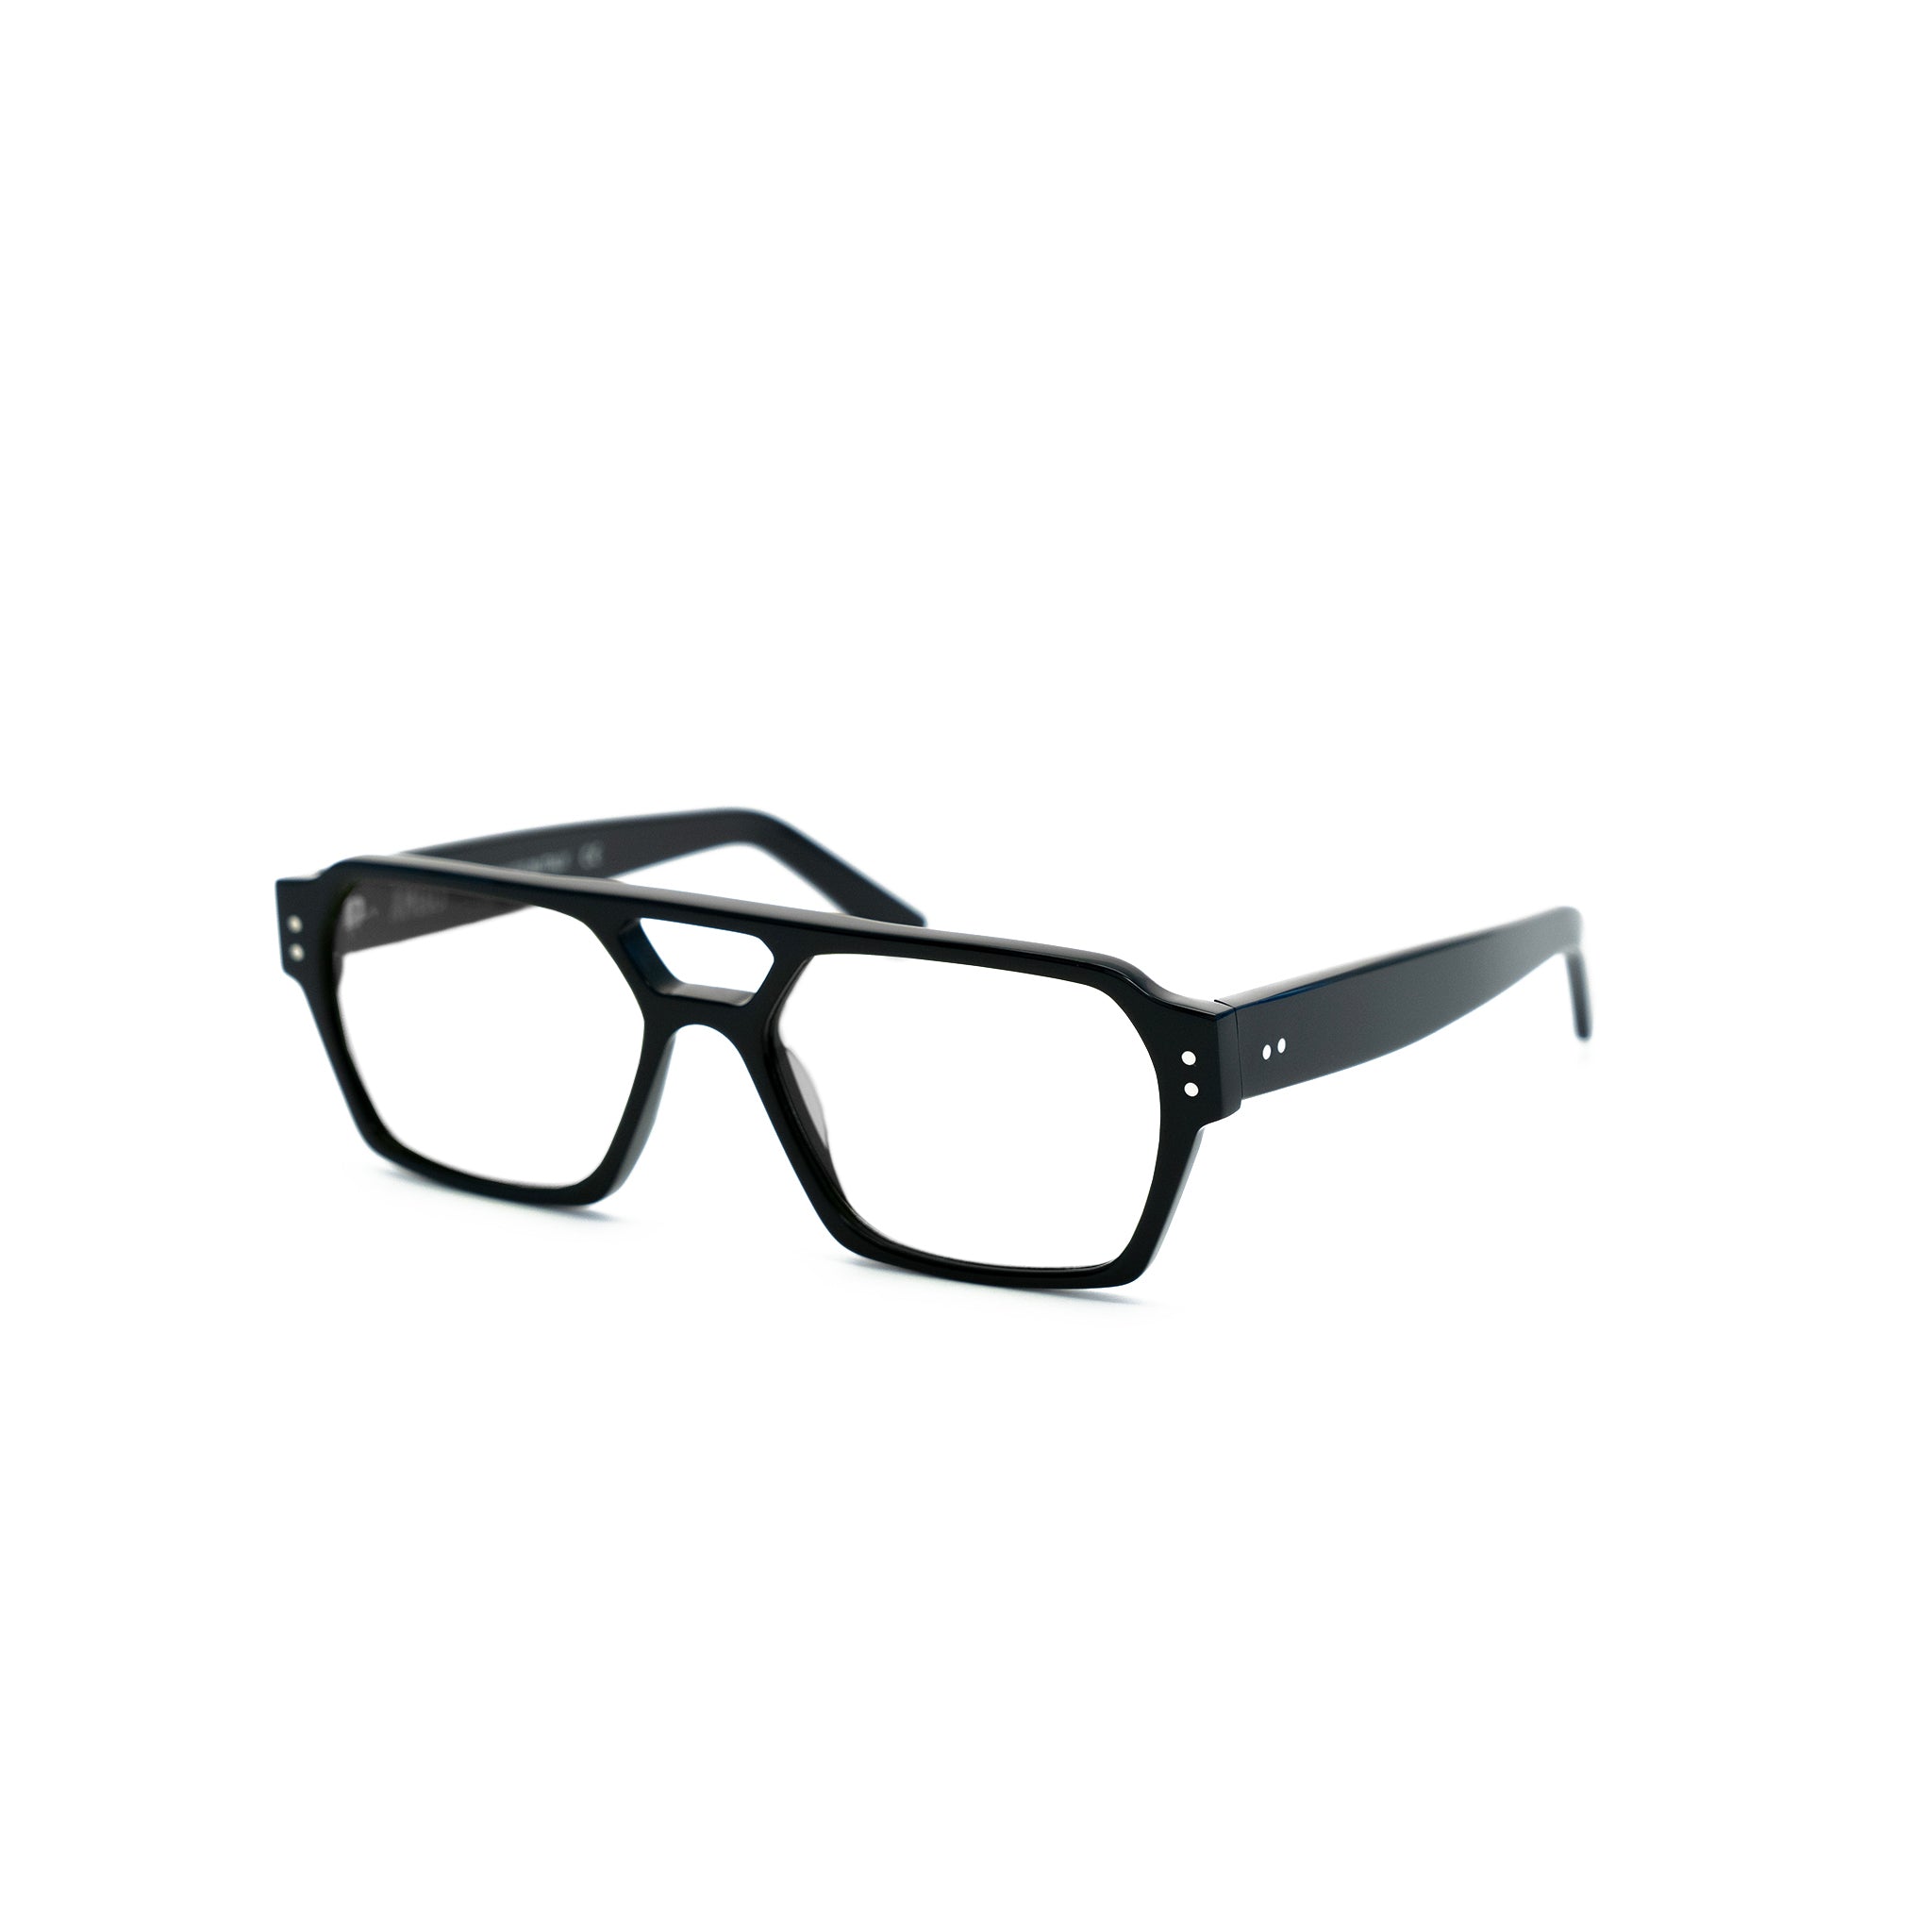 Ego optical glasses in black from Ameos Eyewear.